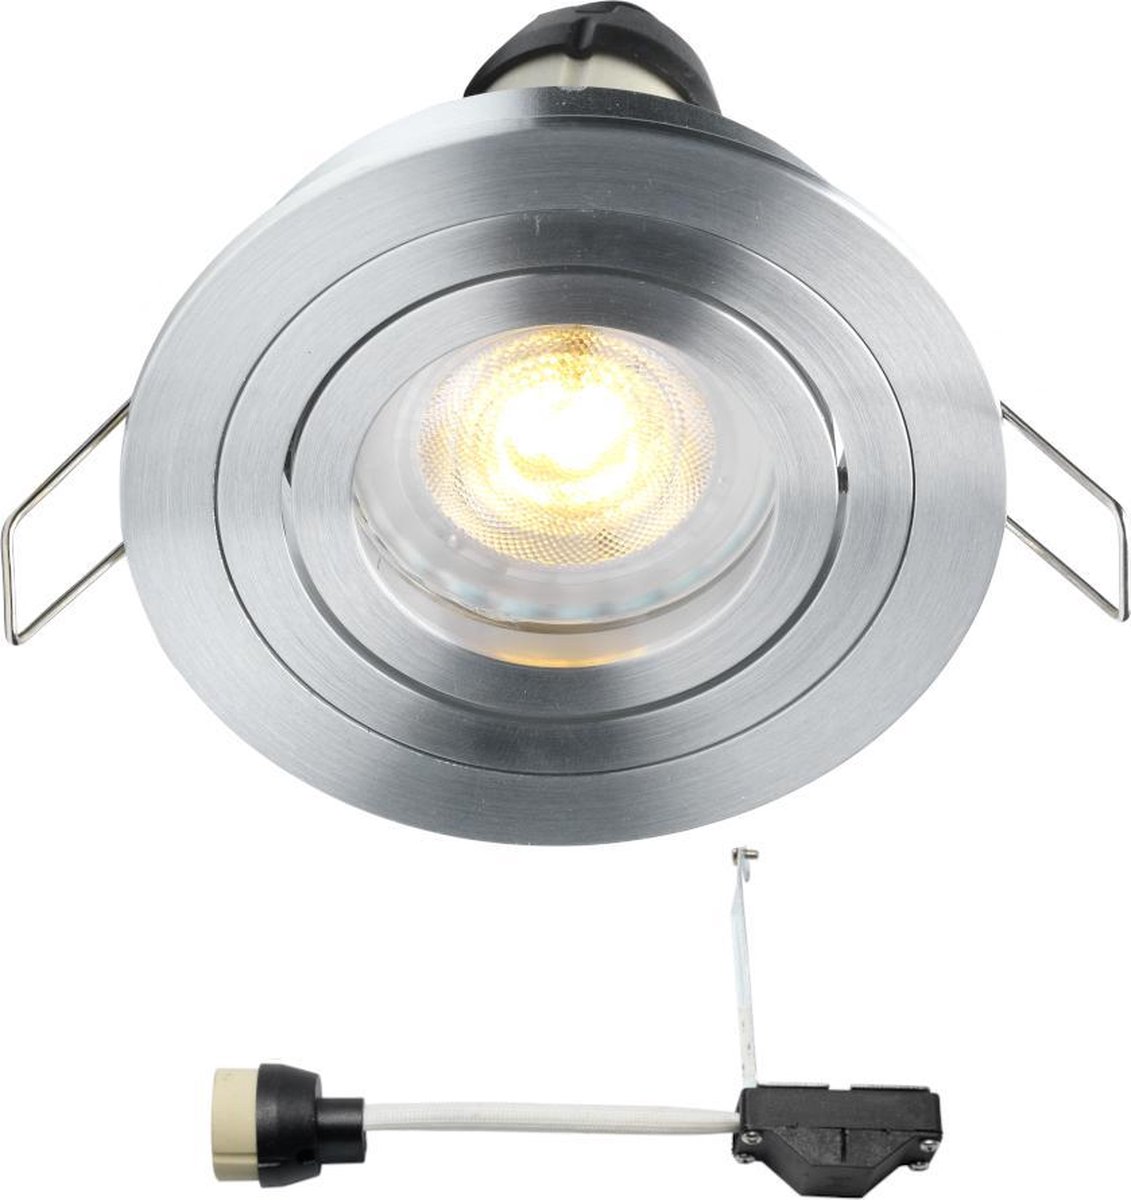 LED inbouwspot Coblux - inbouwspots / downlights / plafondspots - 4W / rond / dimbaar / kantelbaar / 230V / IP20 / warmwit